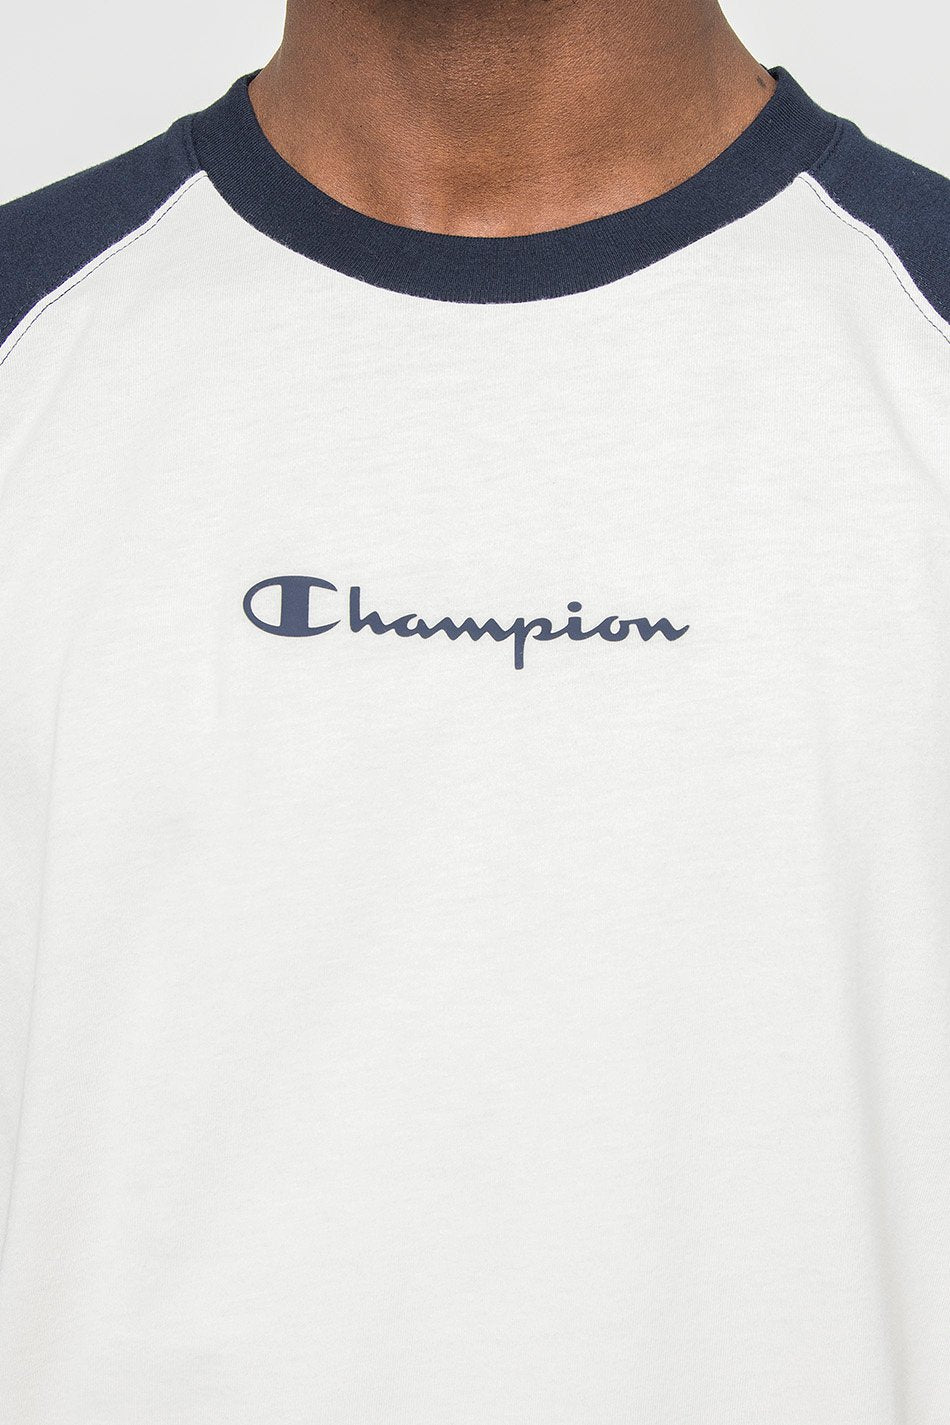 Camiseta Champion OFW/NNY